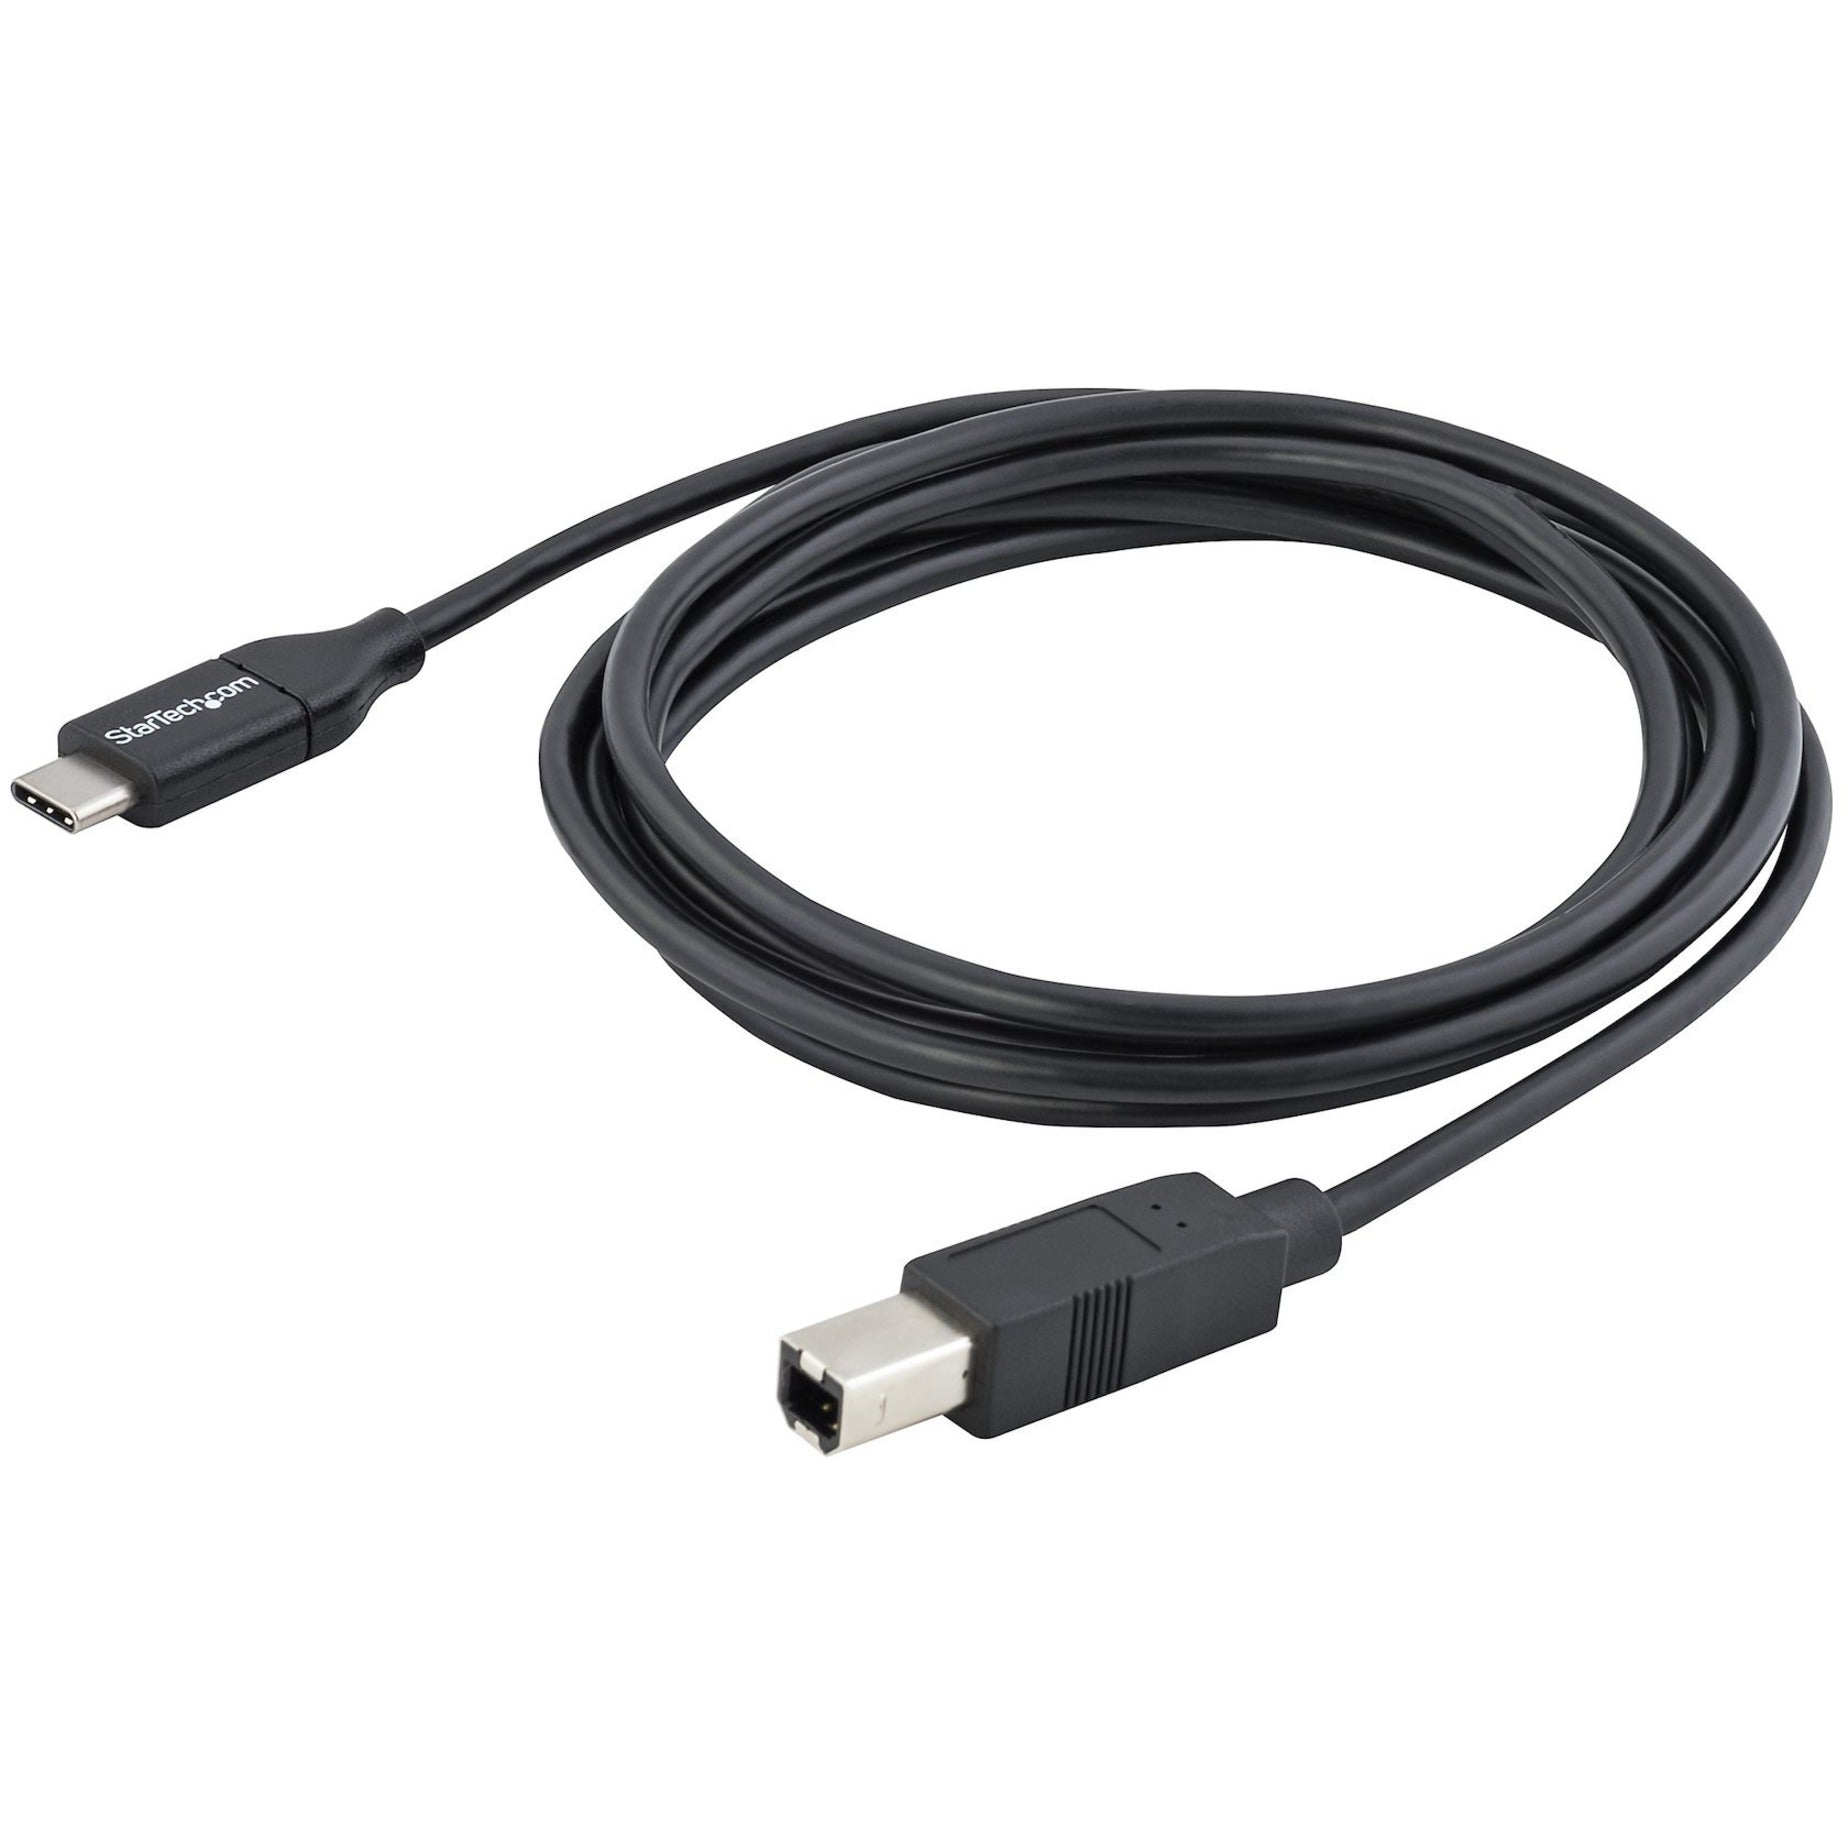 StarTech.com USB2CB2M USB-C to USB-B Cable - M/M - 2m (6 ft.), USB 2.0, Printer Cable, Reversible, Black